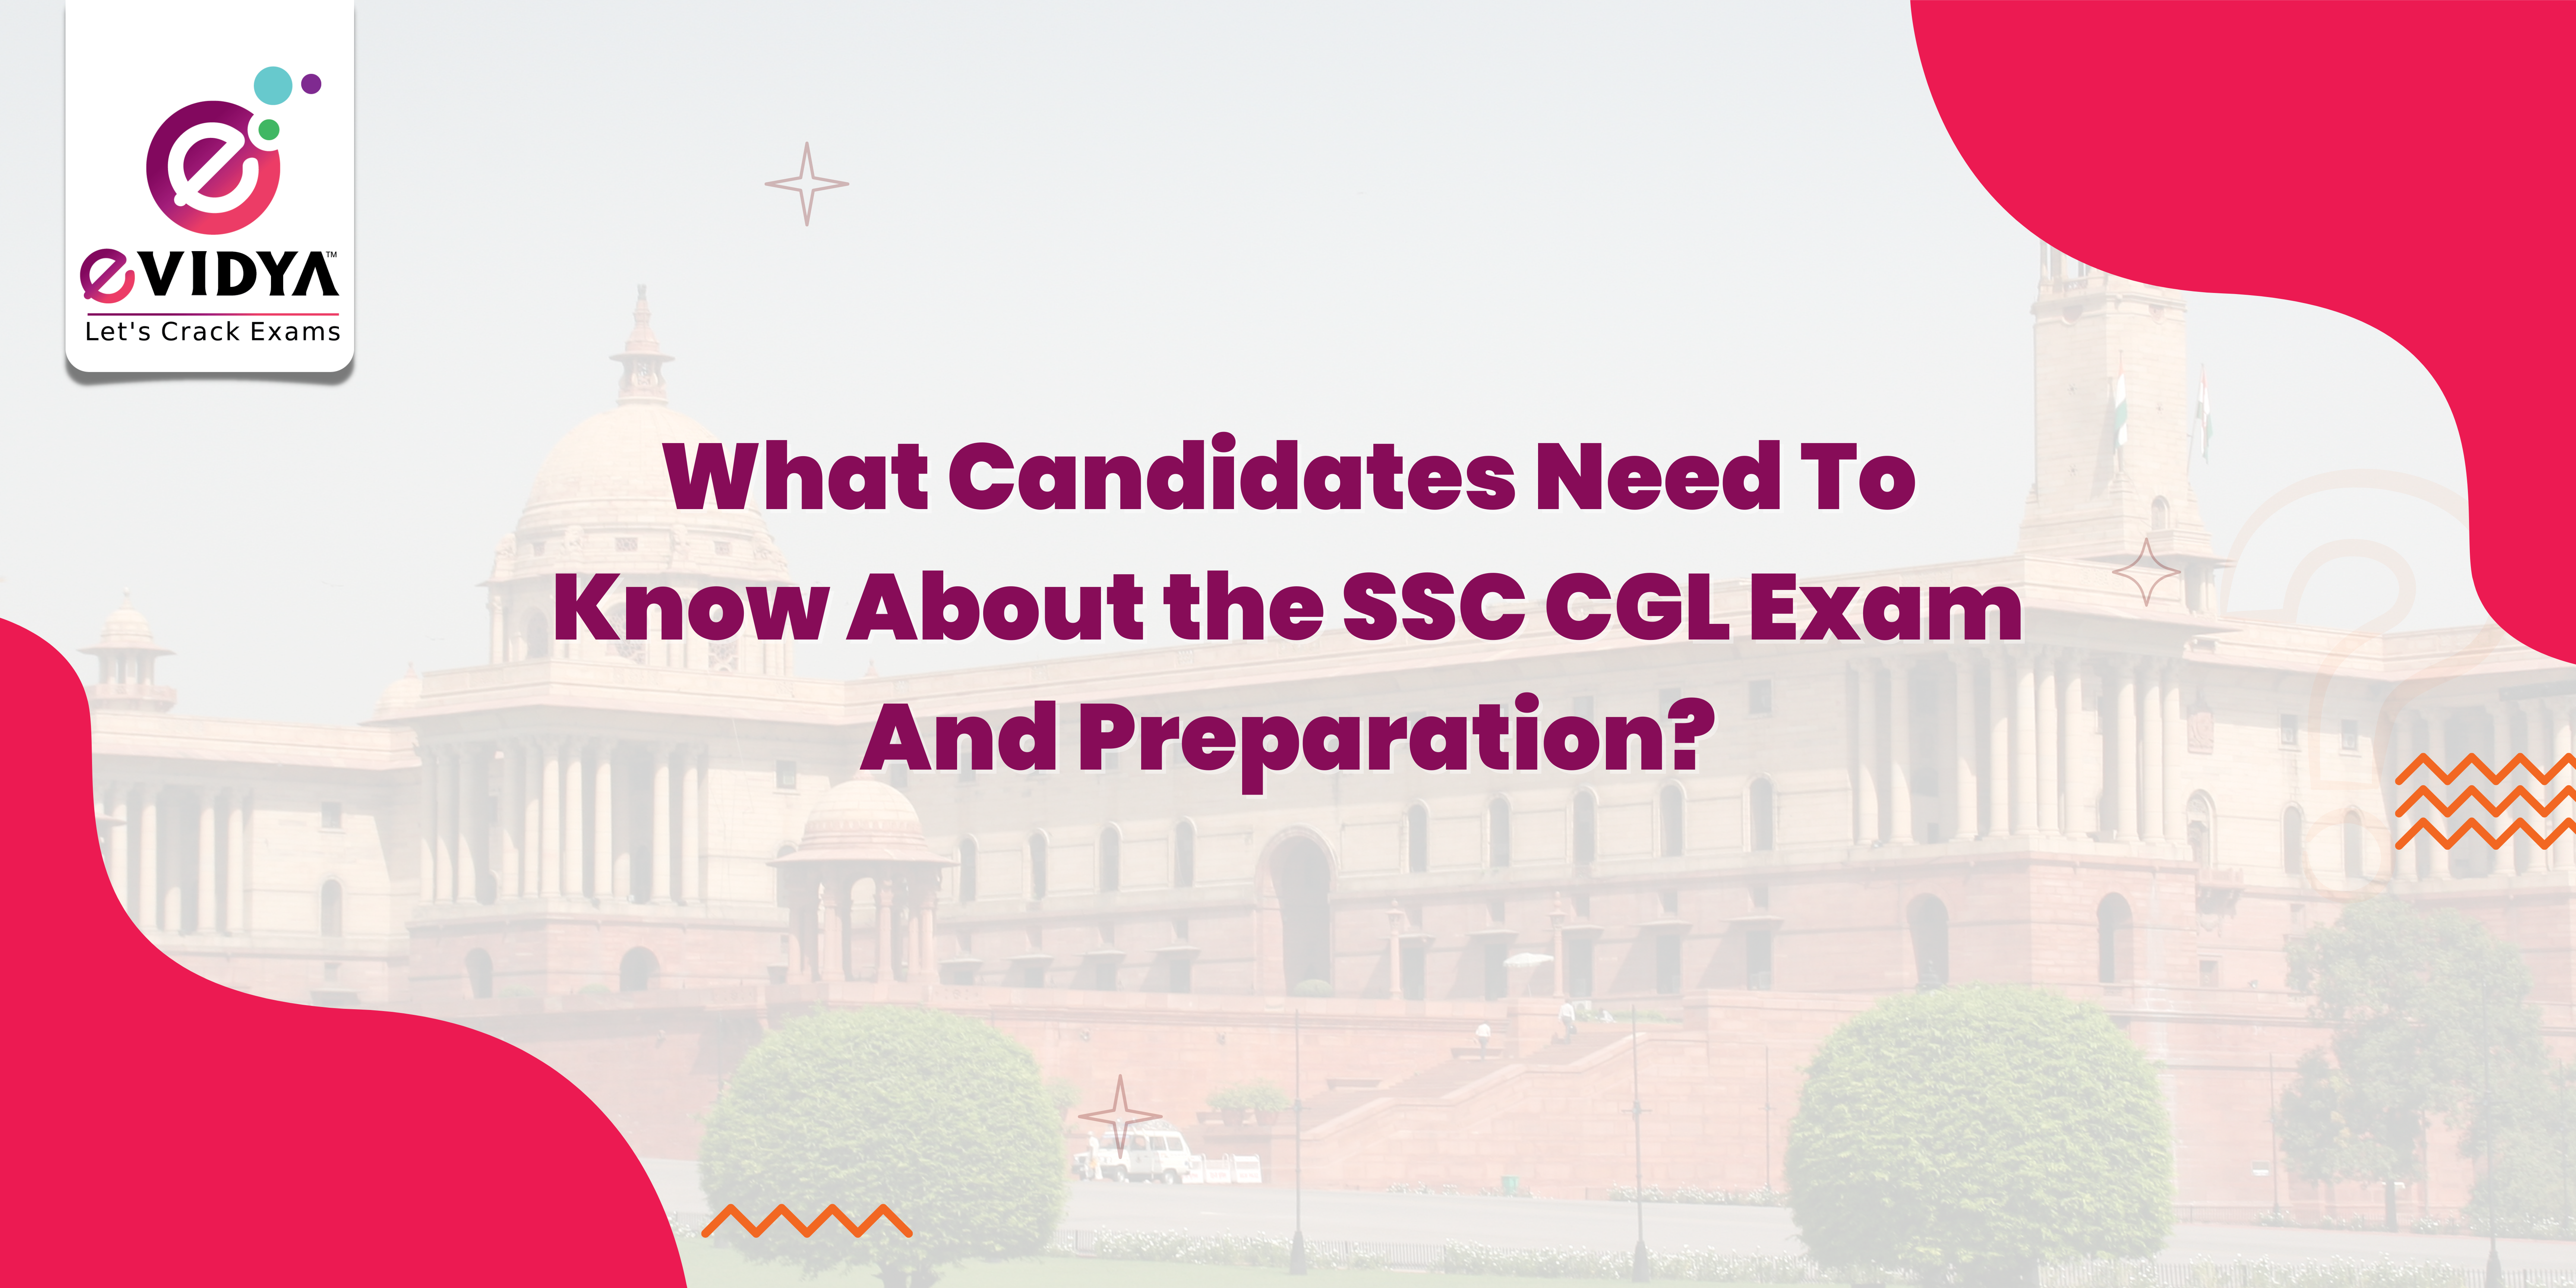 SSC CGL exam